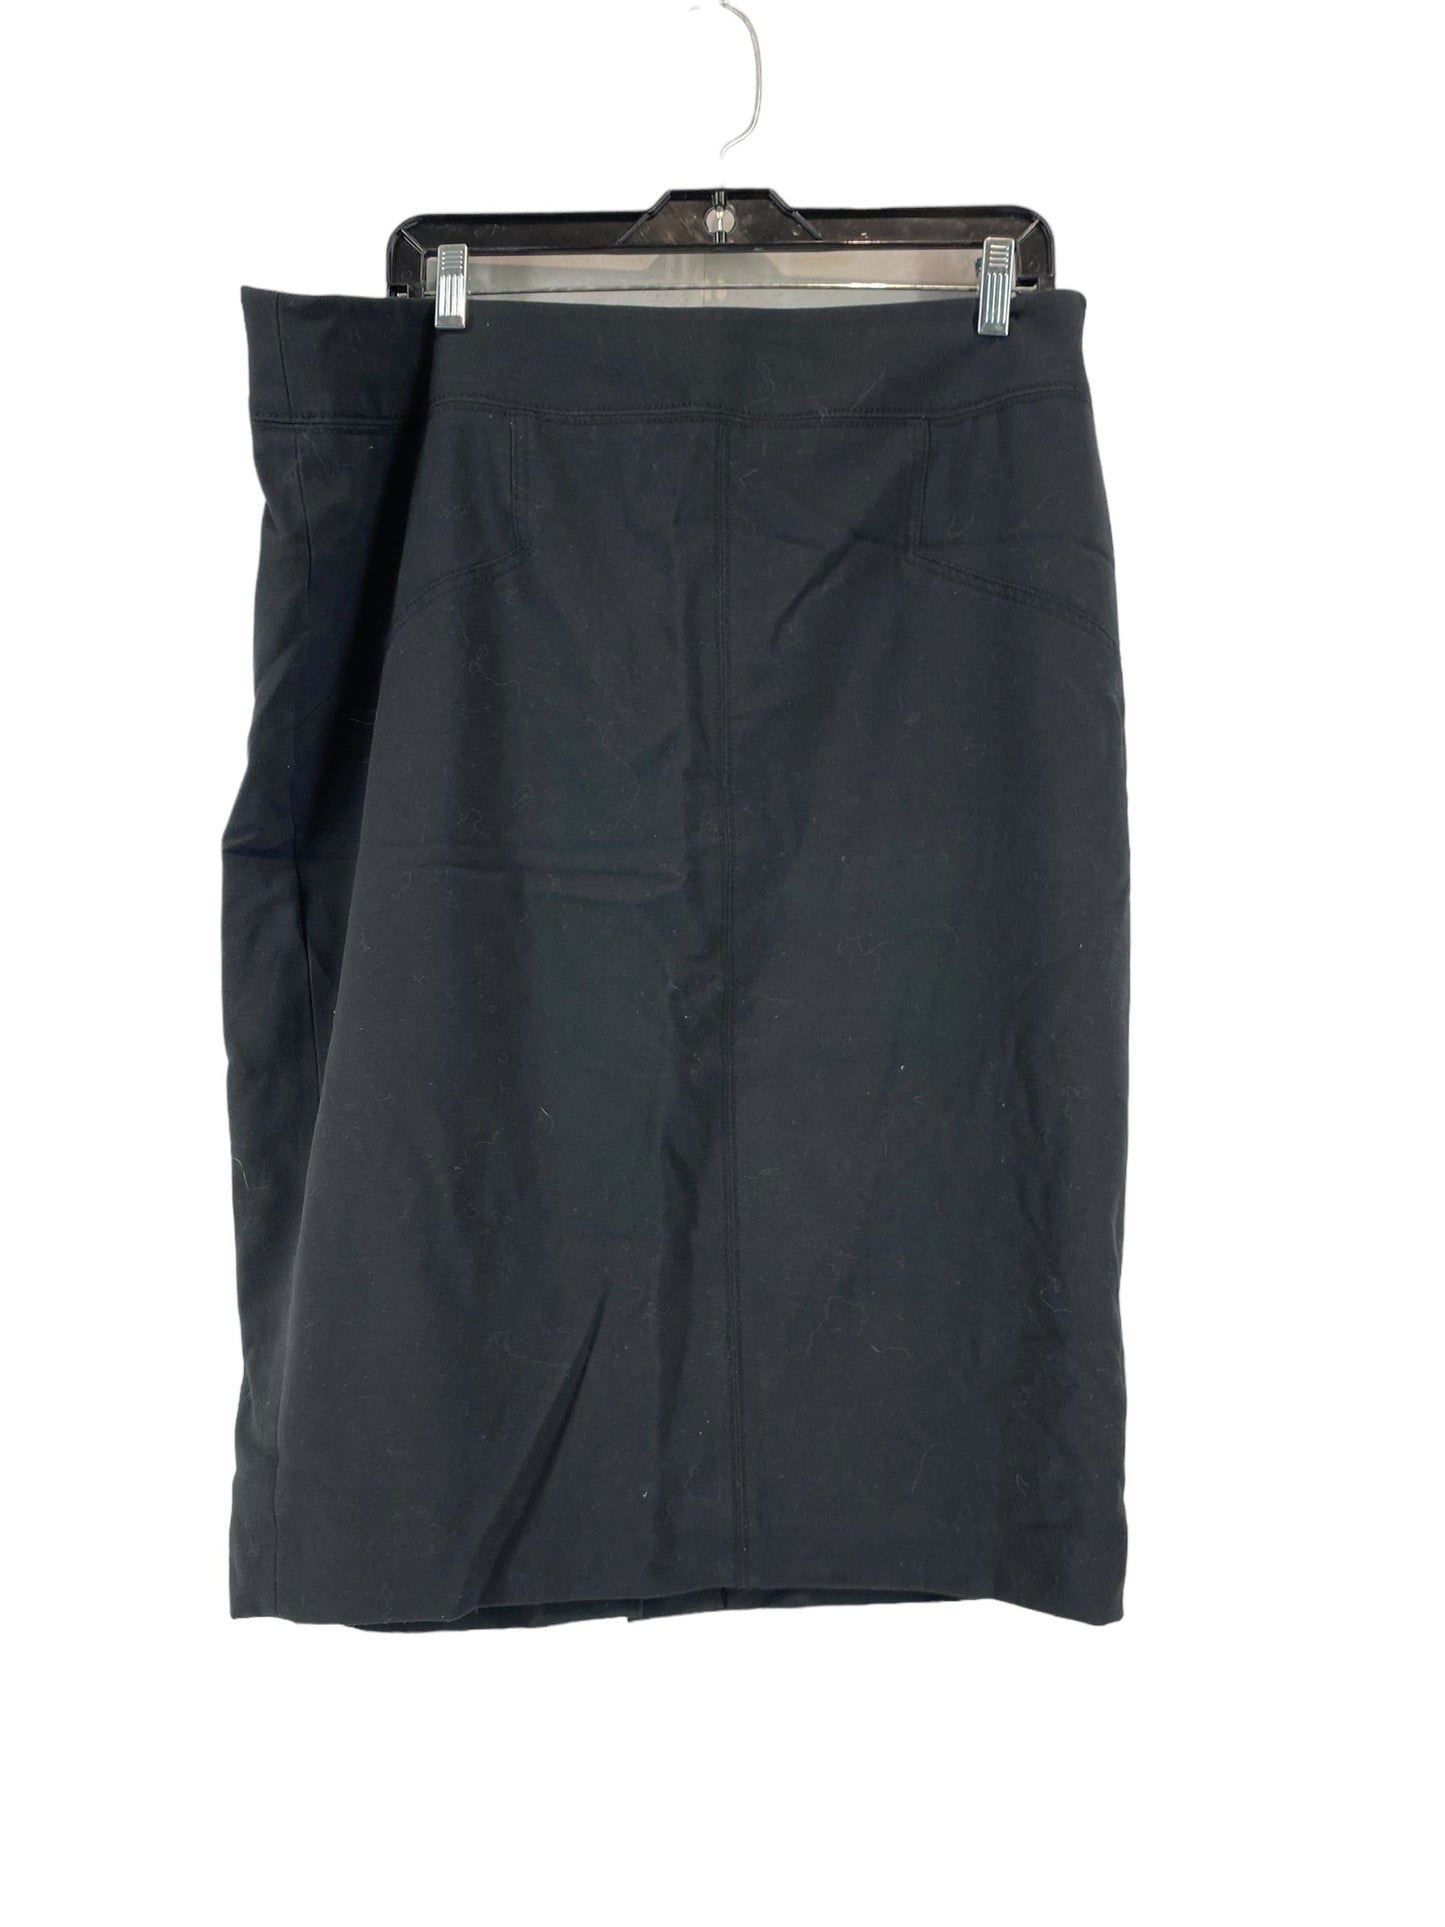 Black Skirt Midi Clothes Mentor, Size 16